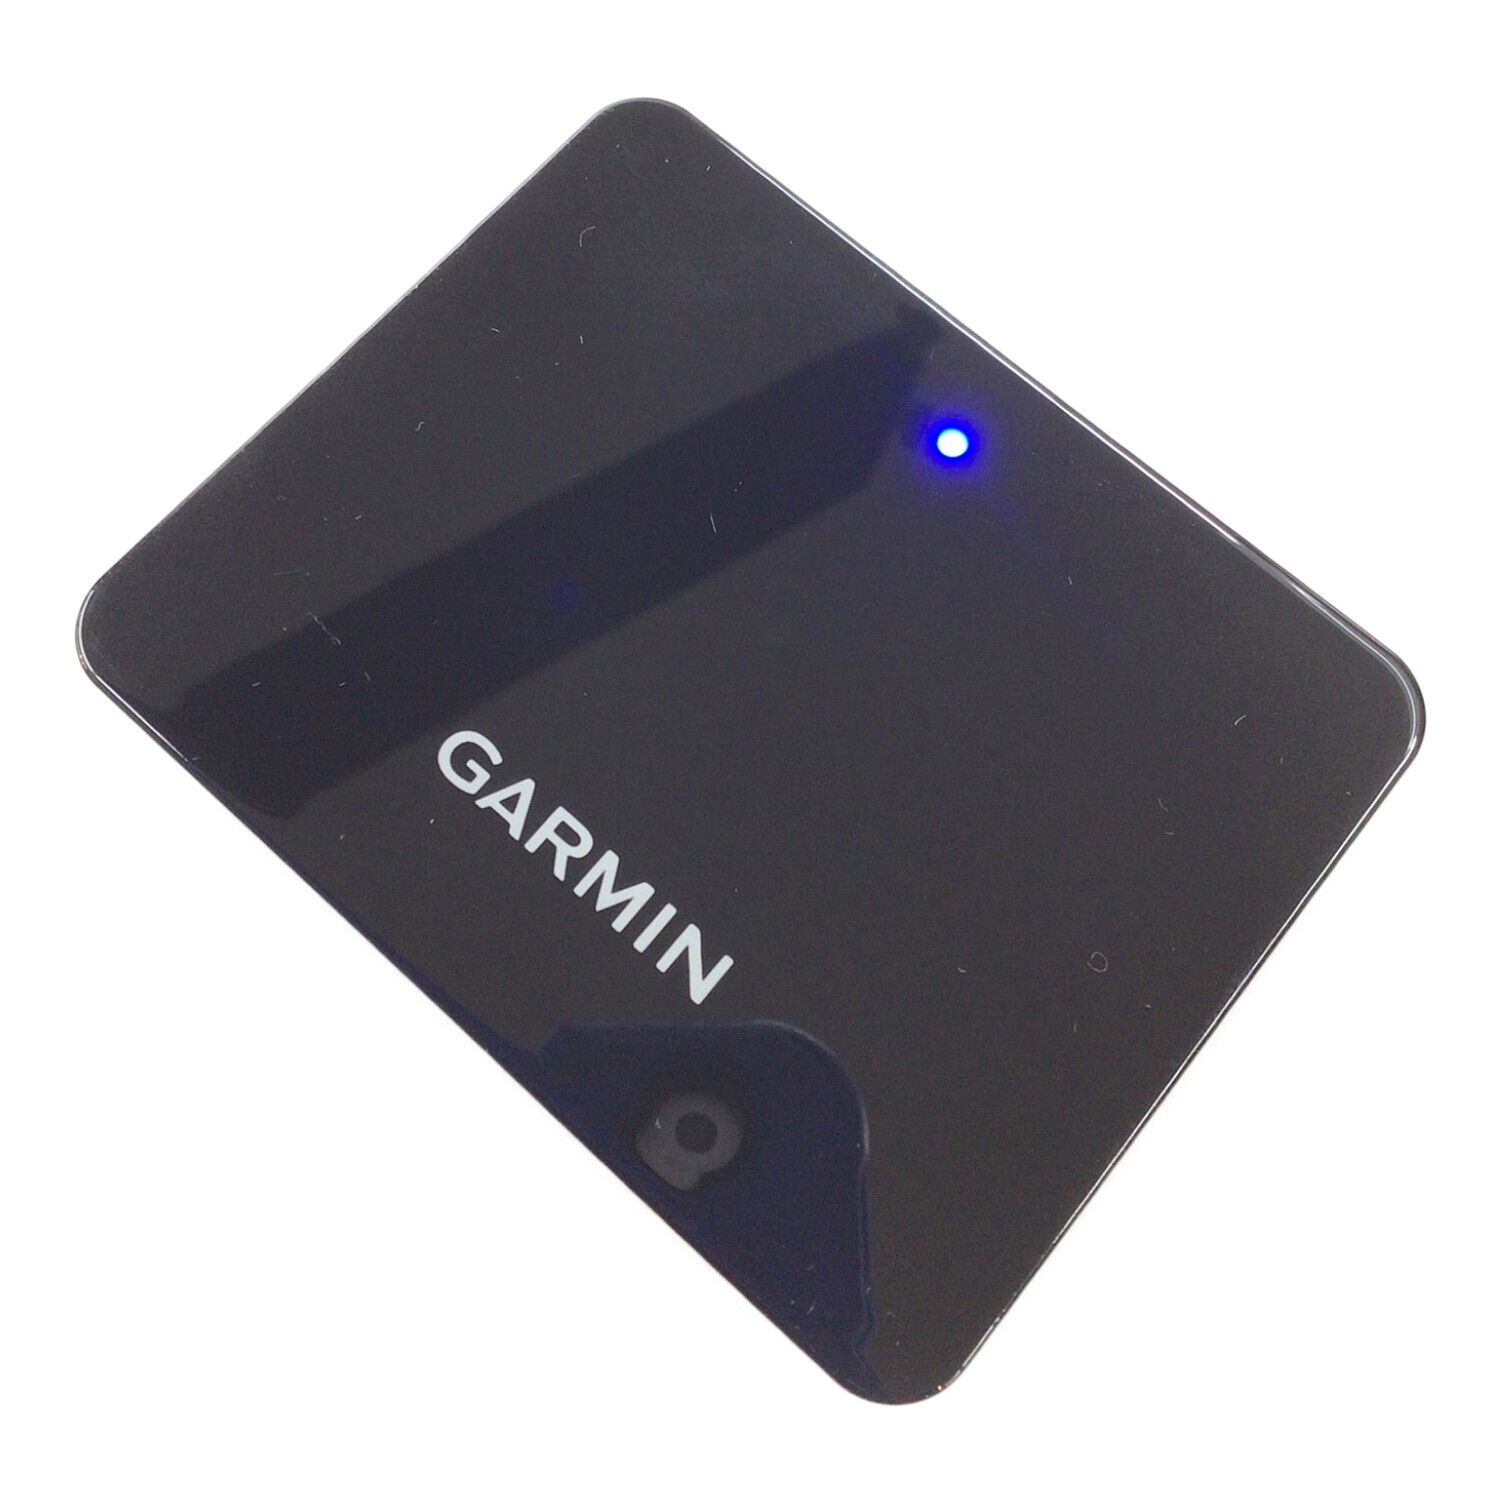 GARMIN (ガーミン) ゴルフ弾道測定器 ブラック ケース付充電ケーブル